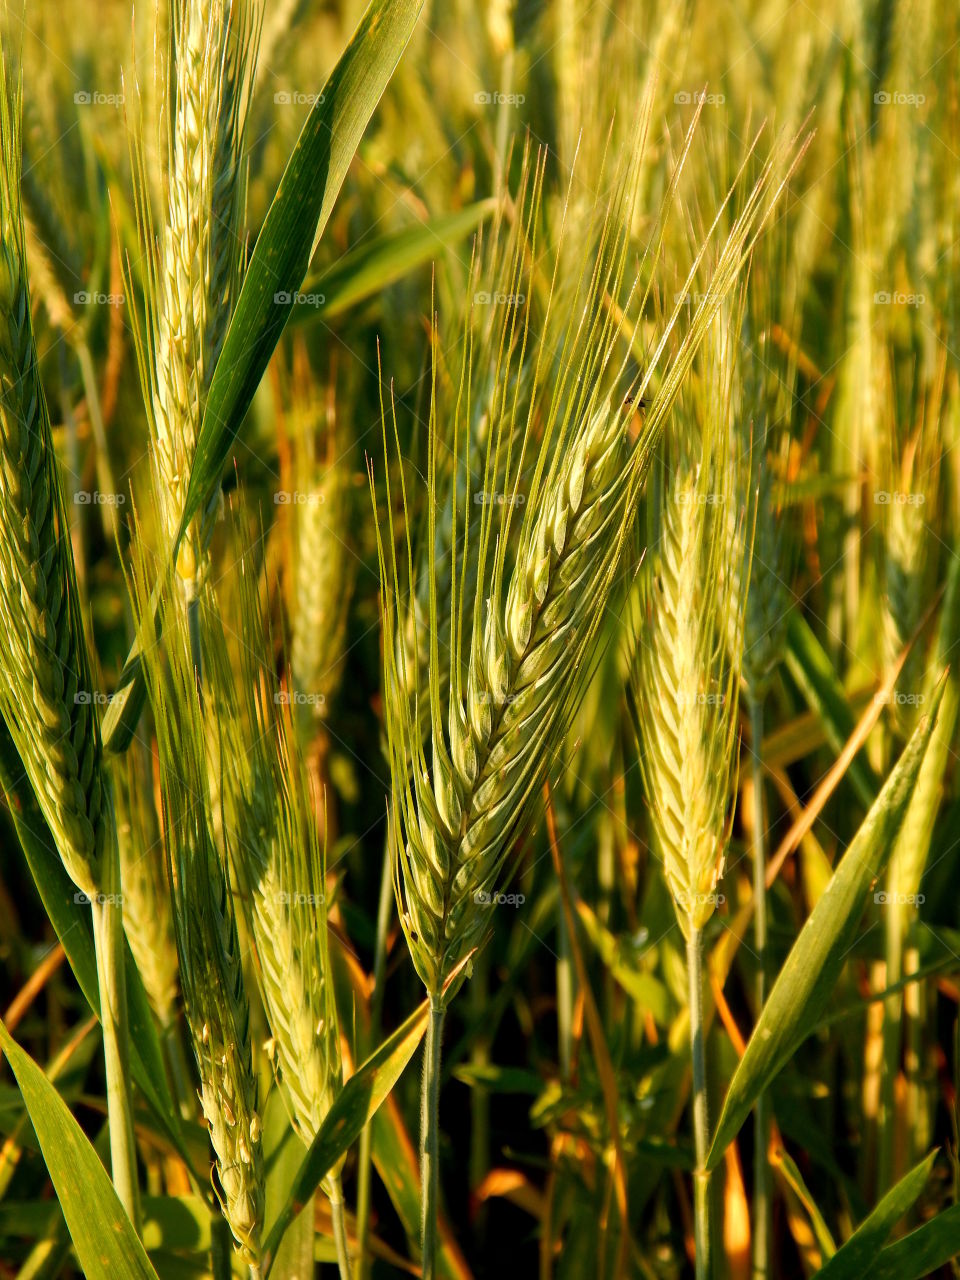 Growing wheat in the field